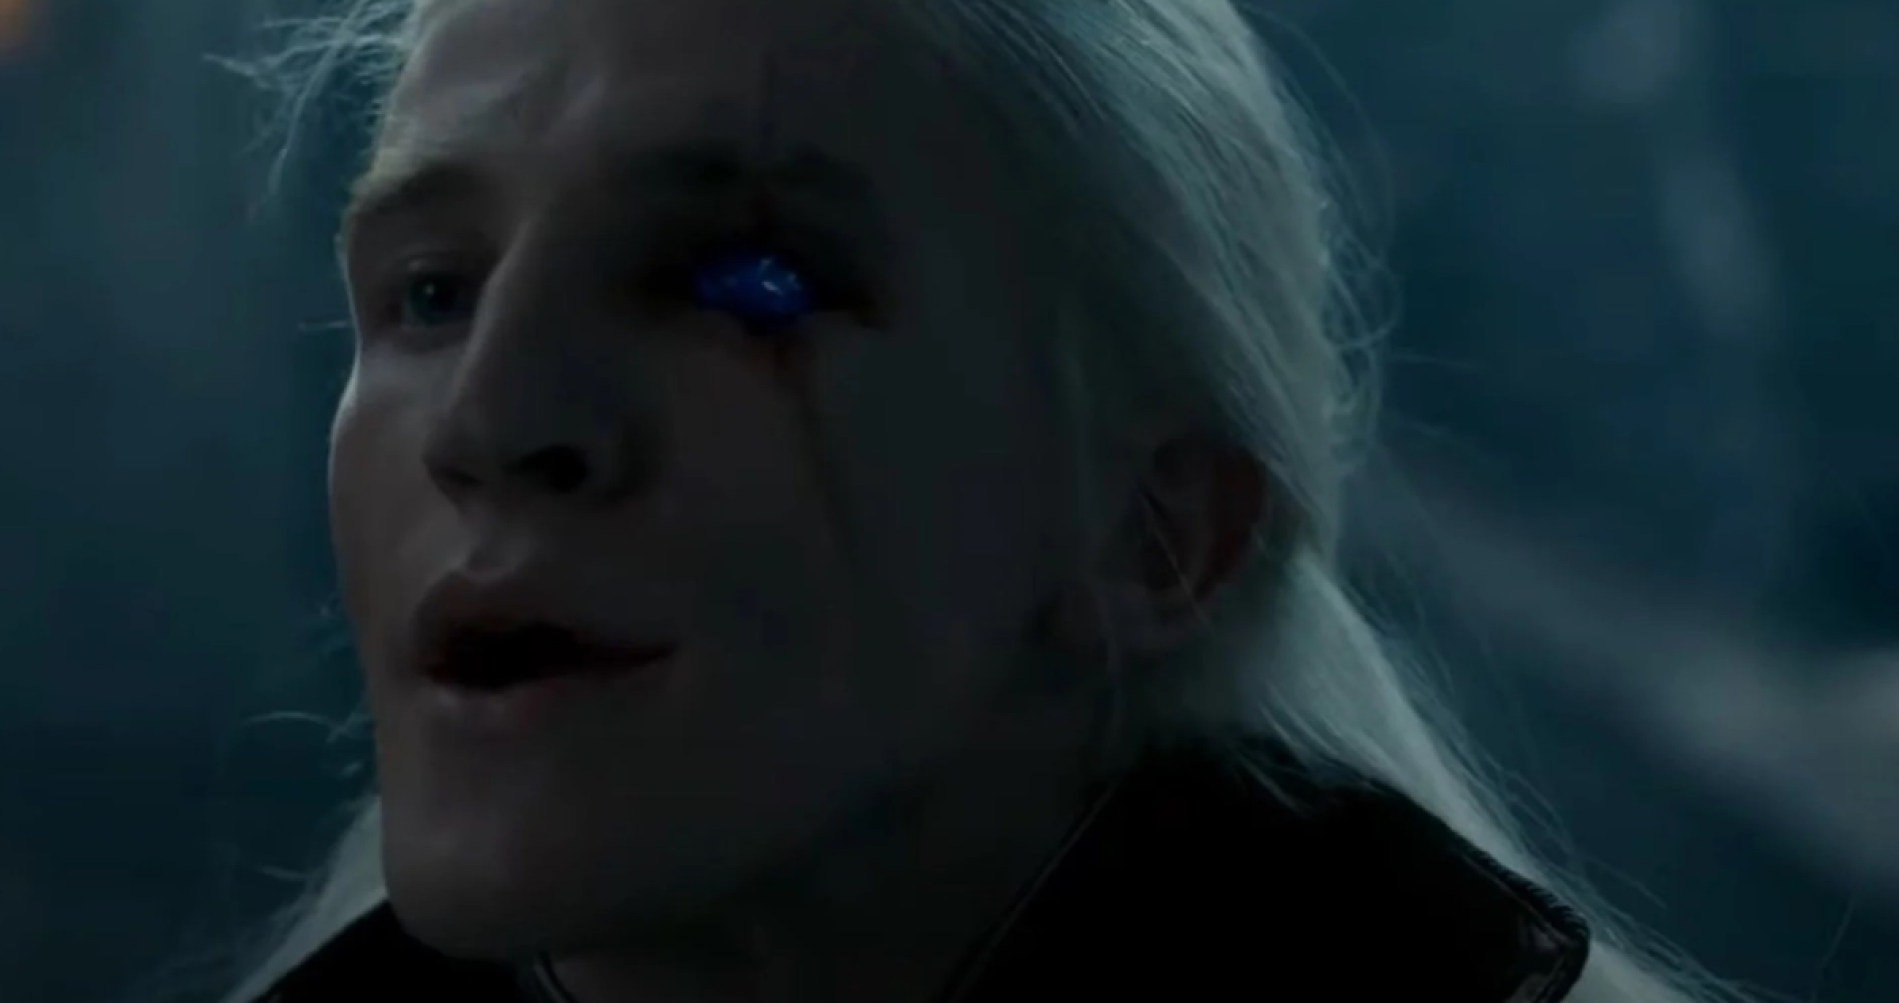 Aemond Targaryen reveals his sapphire isle on the season 1 finale of House of the Dragon